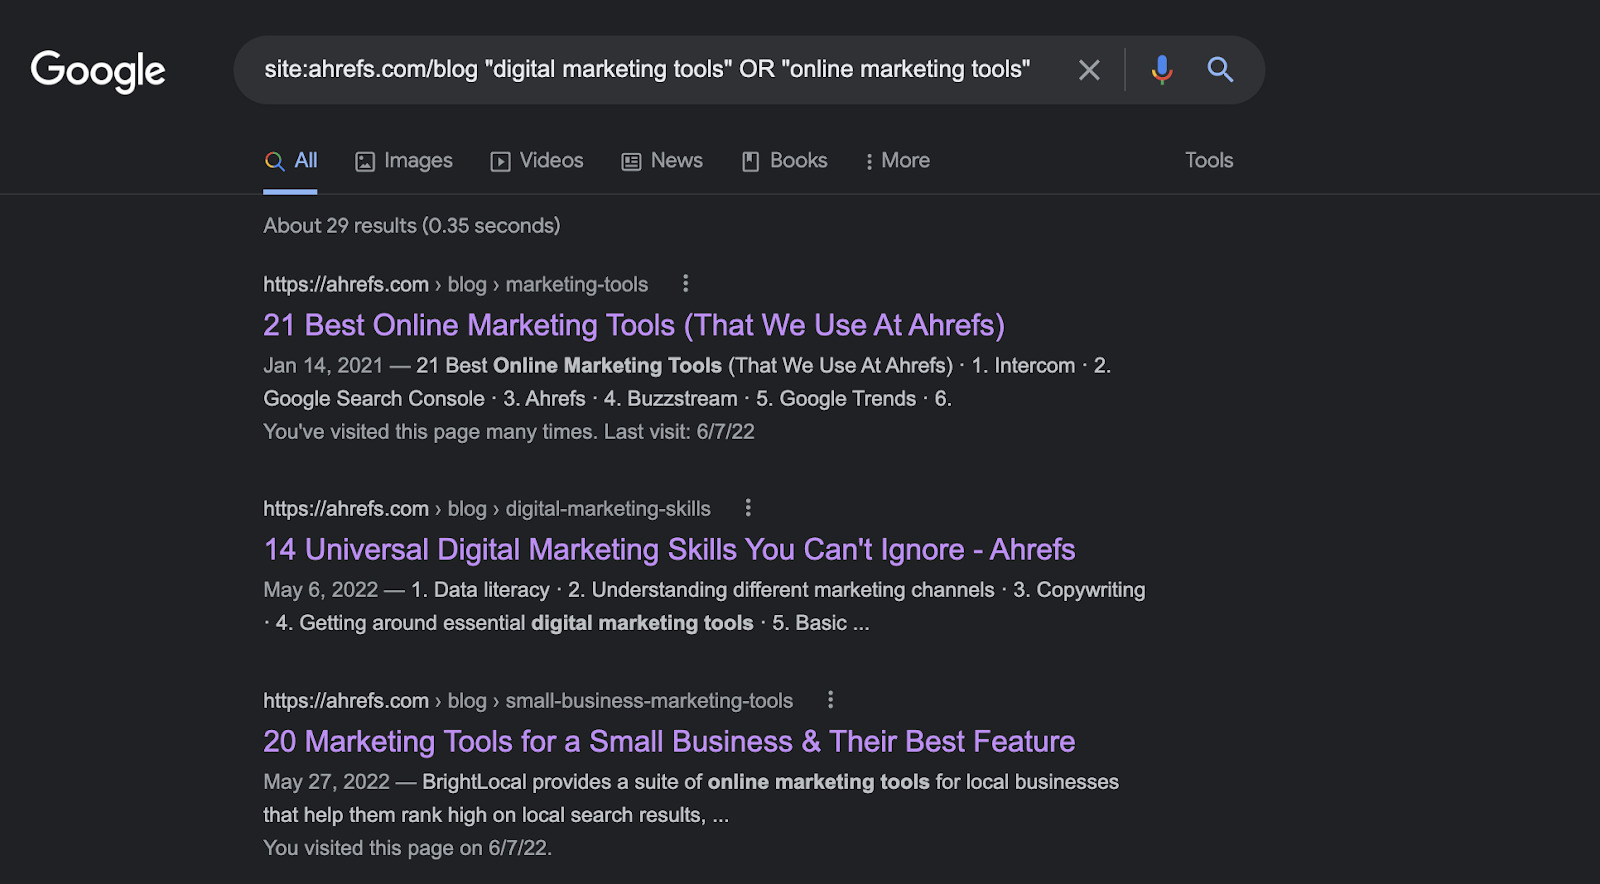 OR 搜索运算符用于在Ahrefs博客上查找 "digital marketing tools"和 "online marketing tools"。